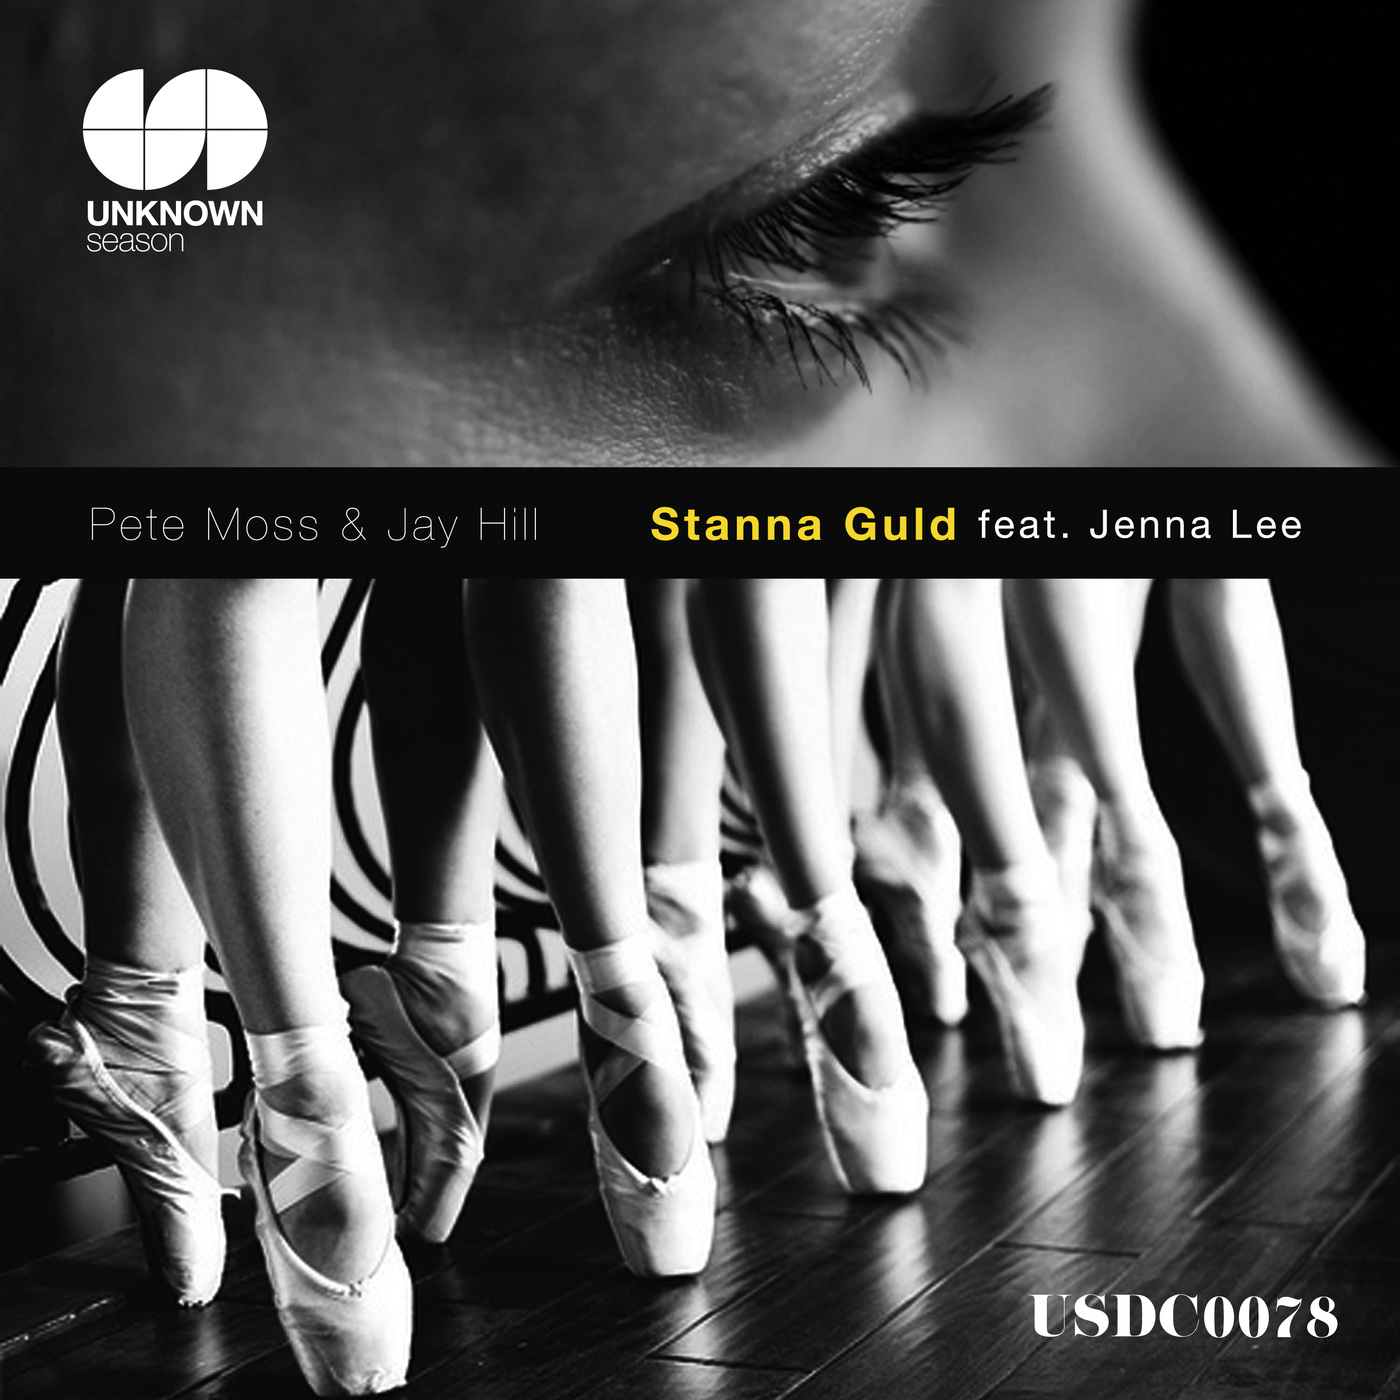 Pete Moss & Jay Hill ft Jenna Lee - Stanna Guld / UNKNOWN season